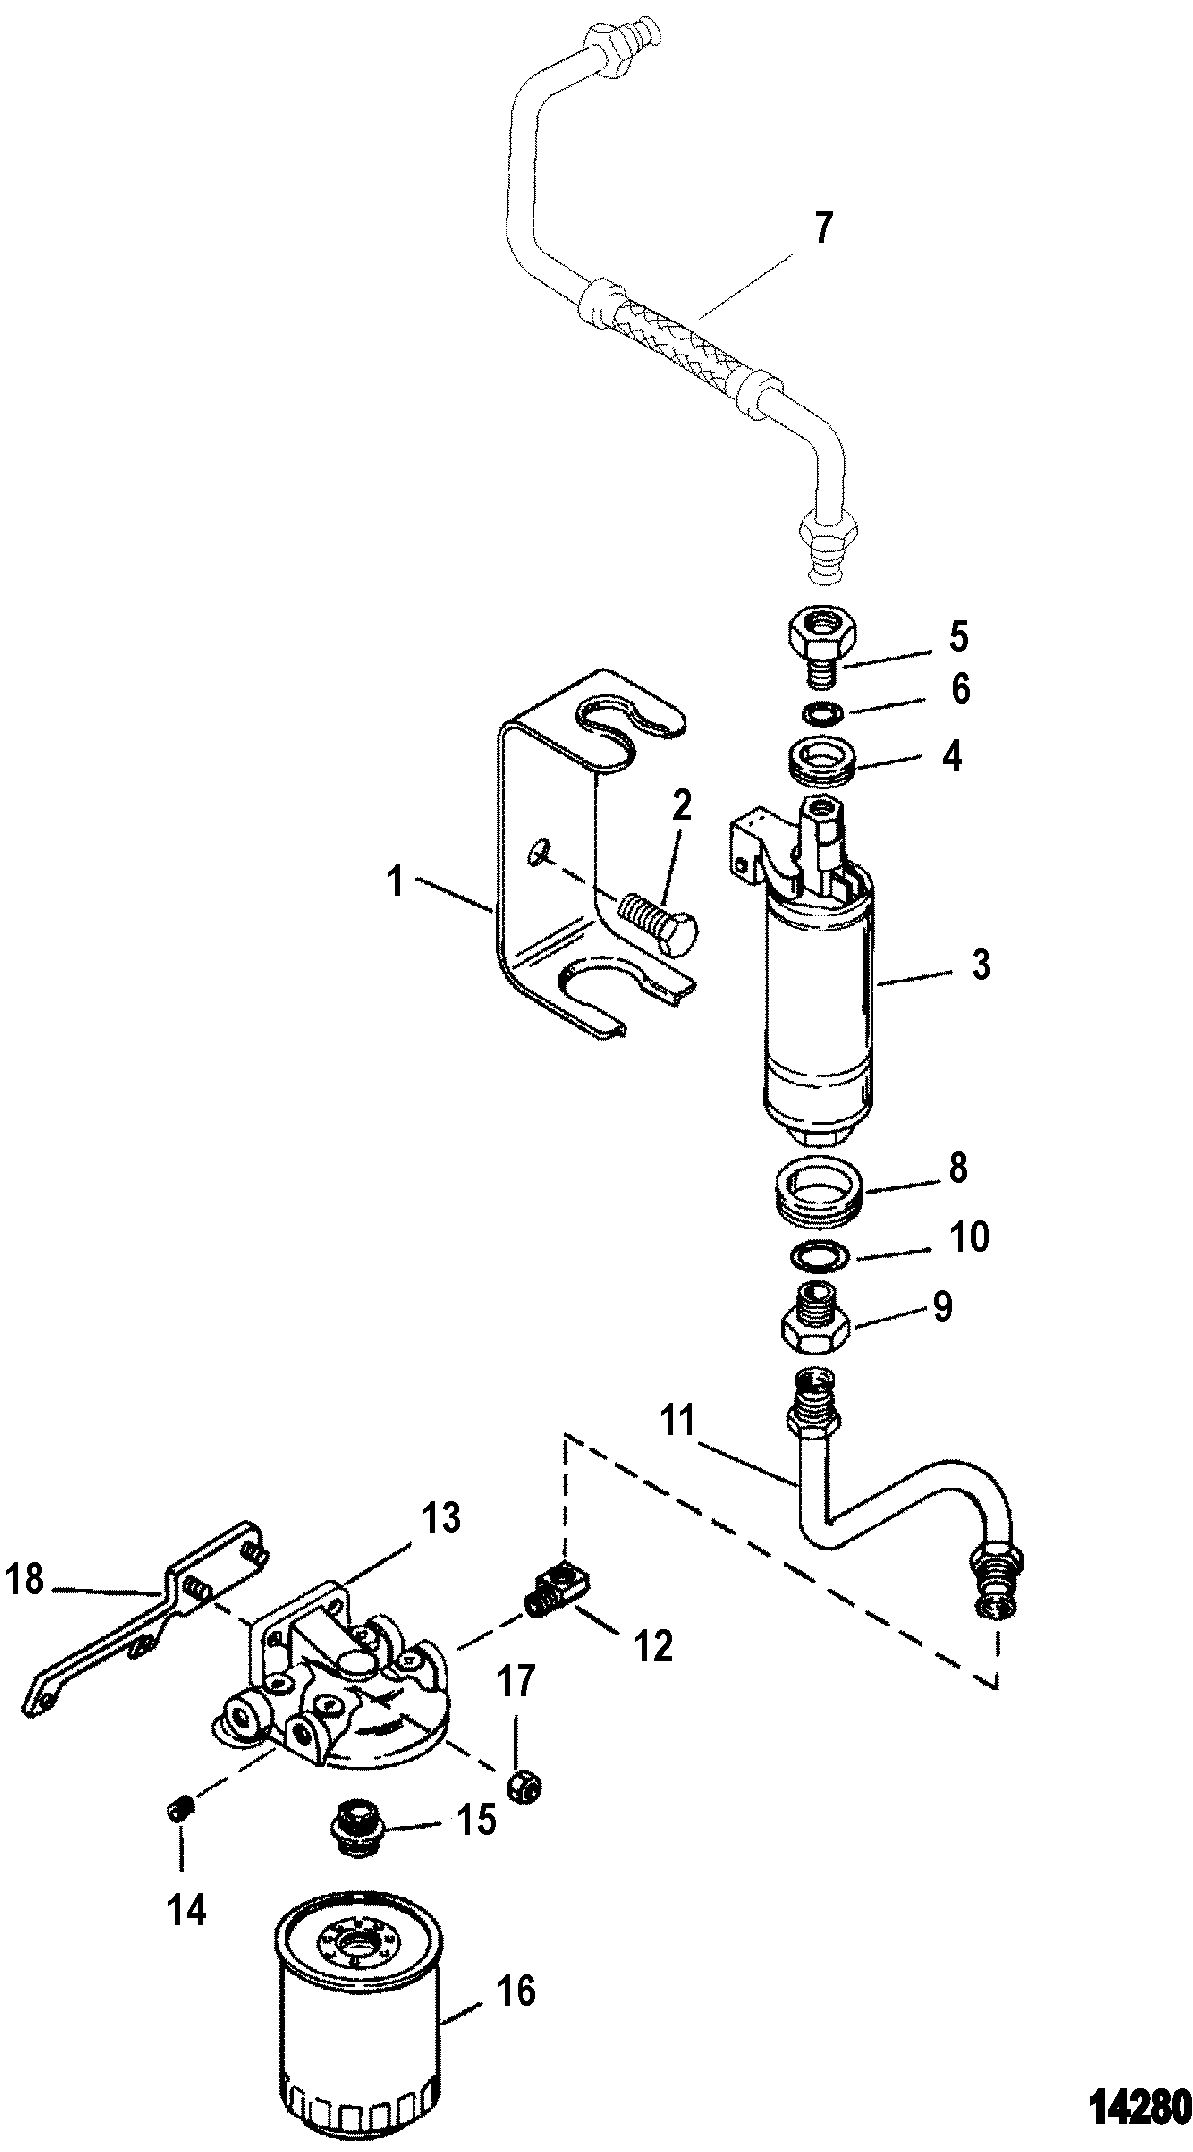 MERCRUISER 262 MAGNUM (EFI - TBI) Fuel Pump And Fuel Filter(VST Fuel System)